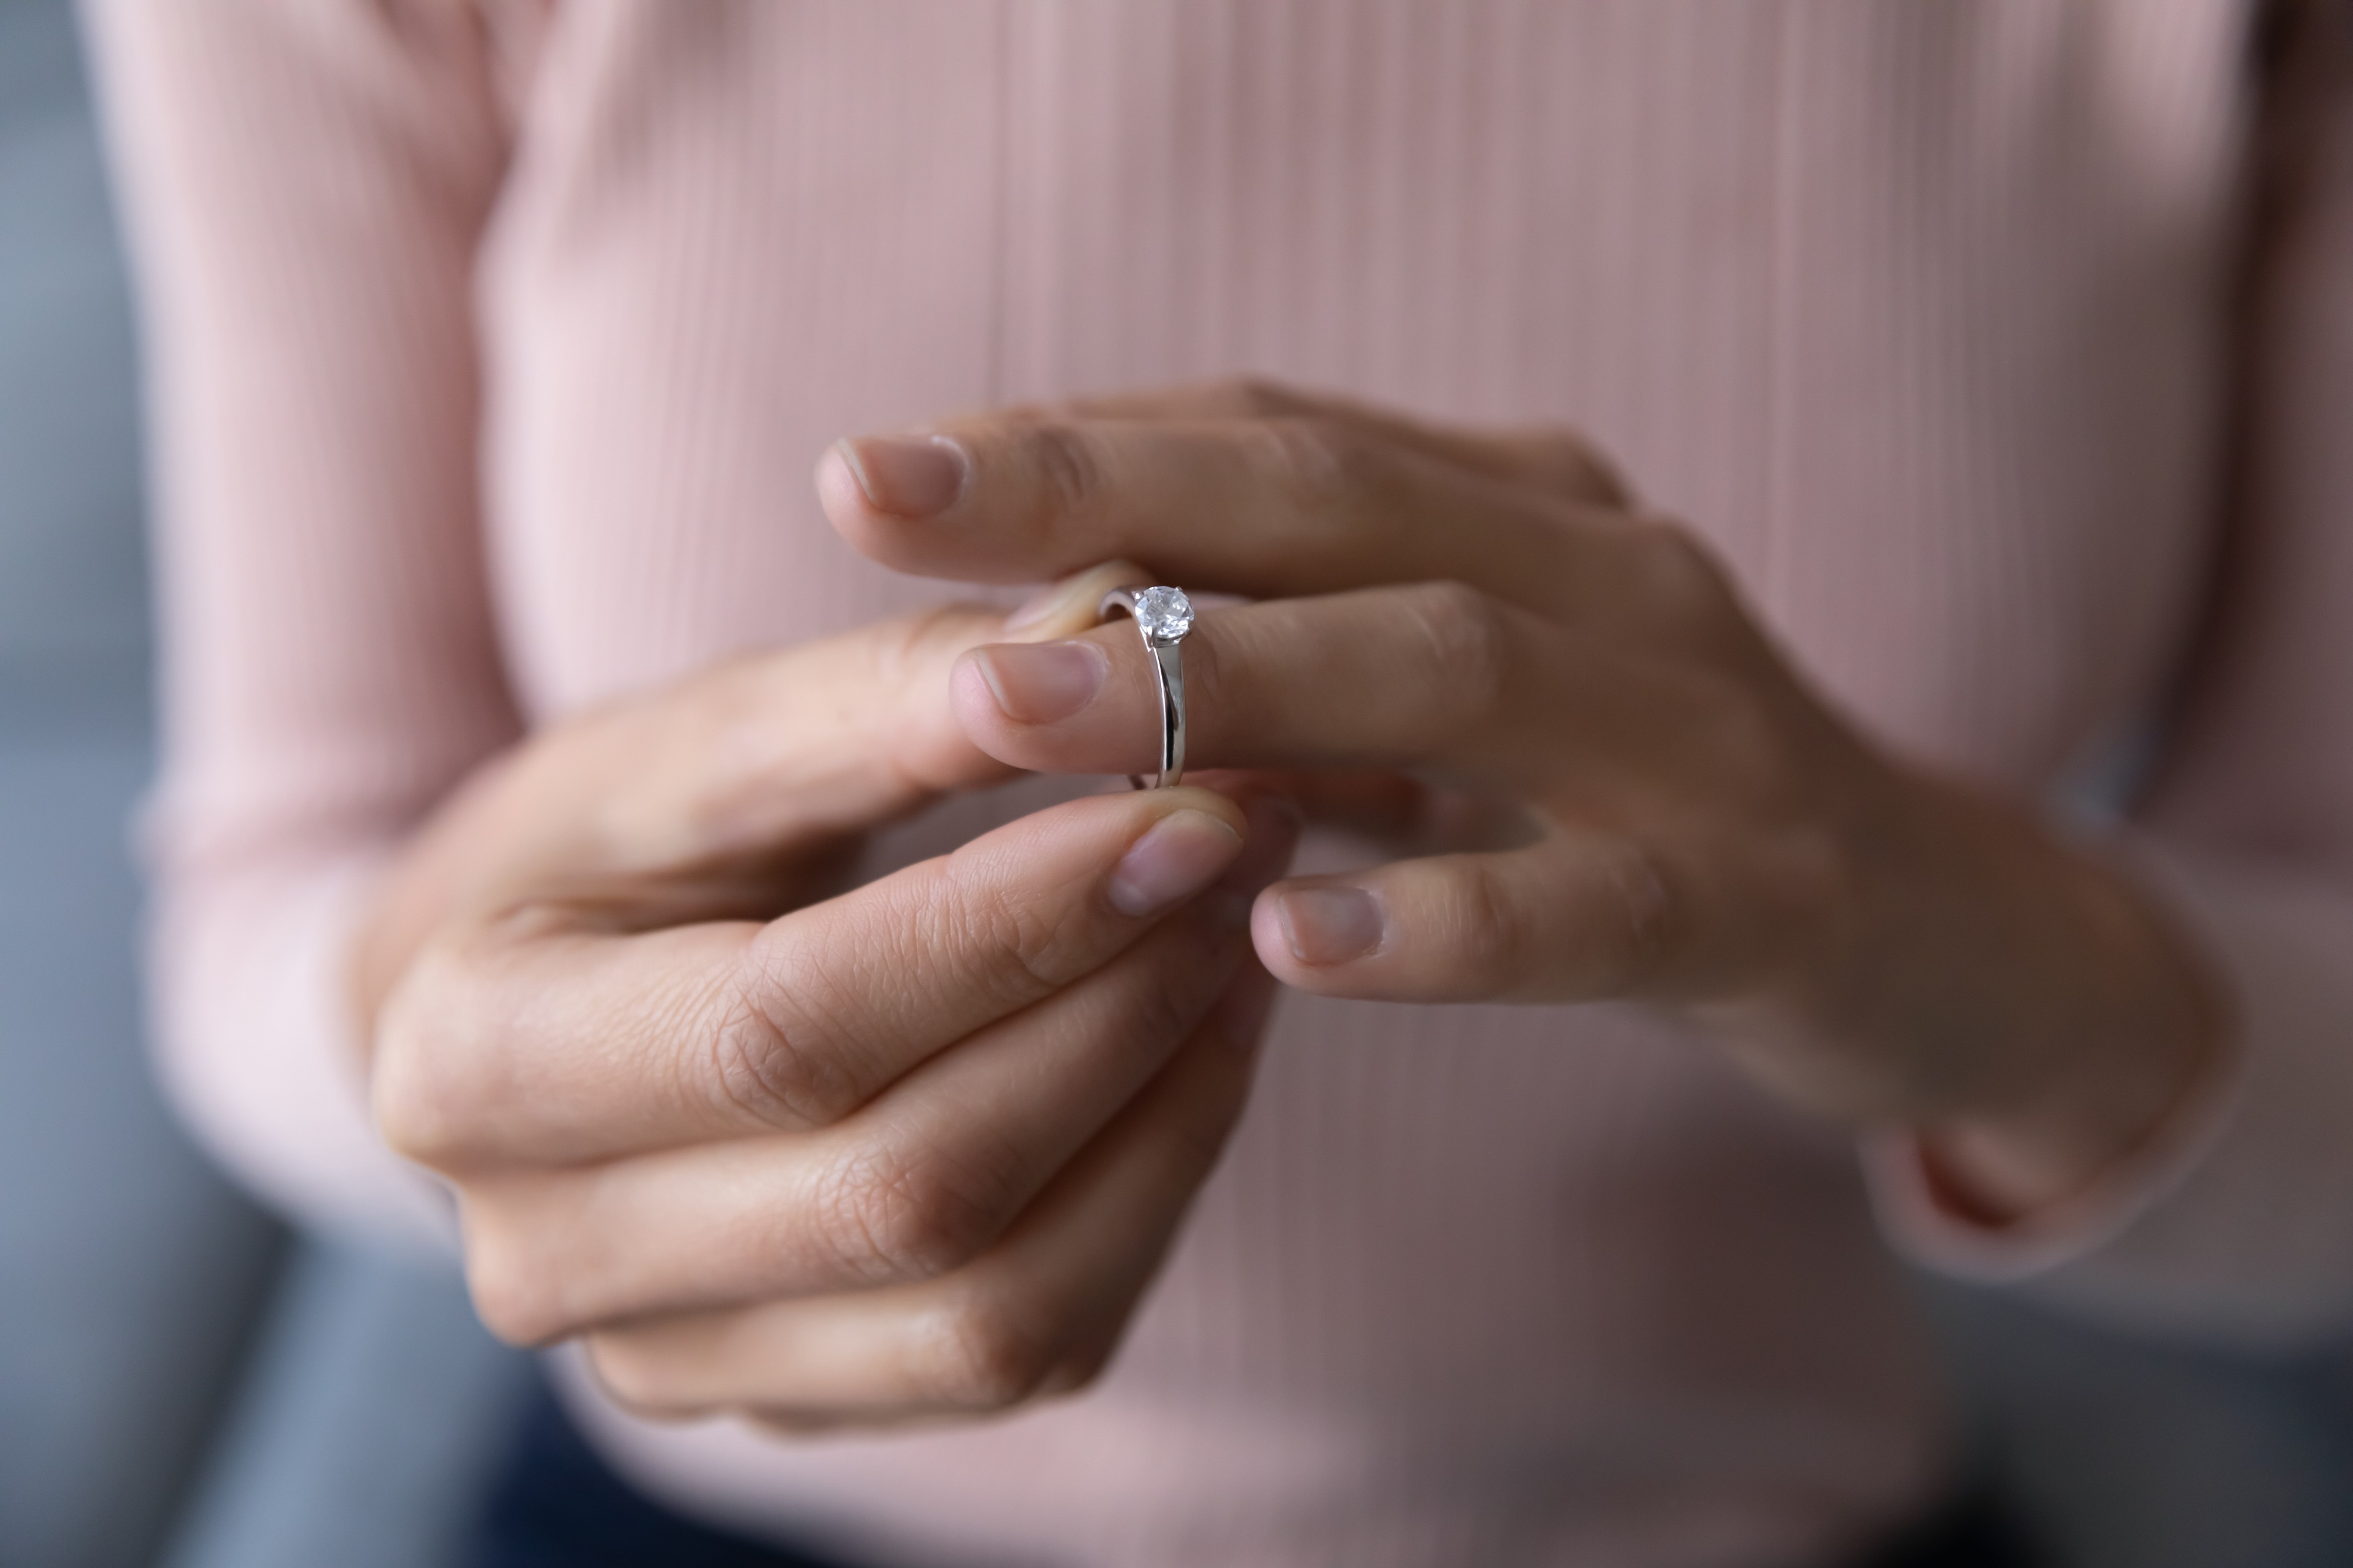 Woman taking off a diamond ring. | Source: Shutterstock